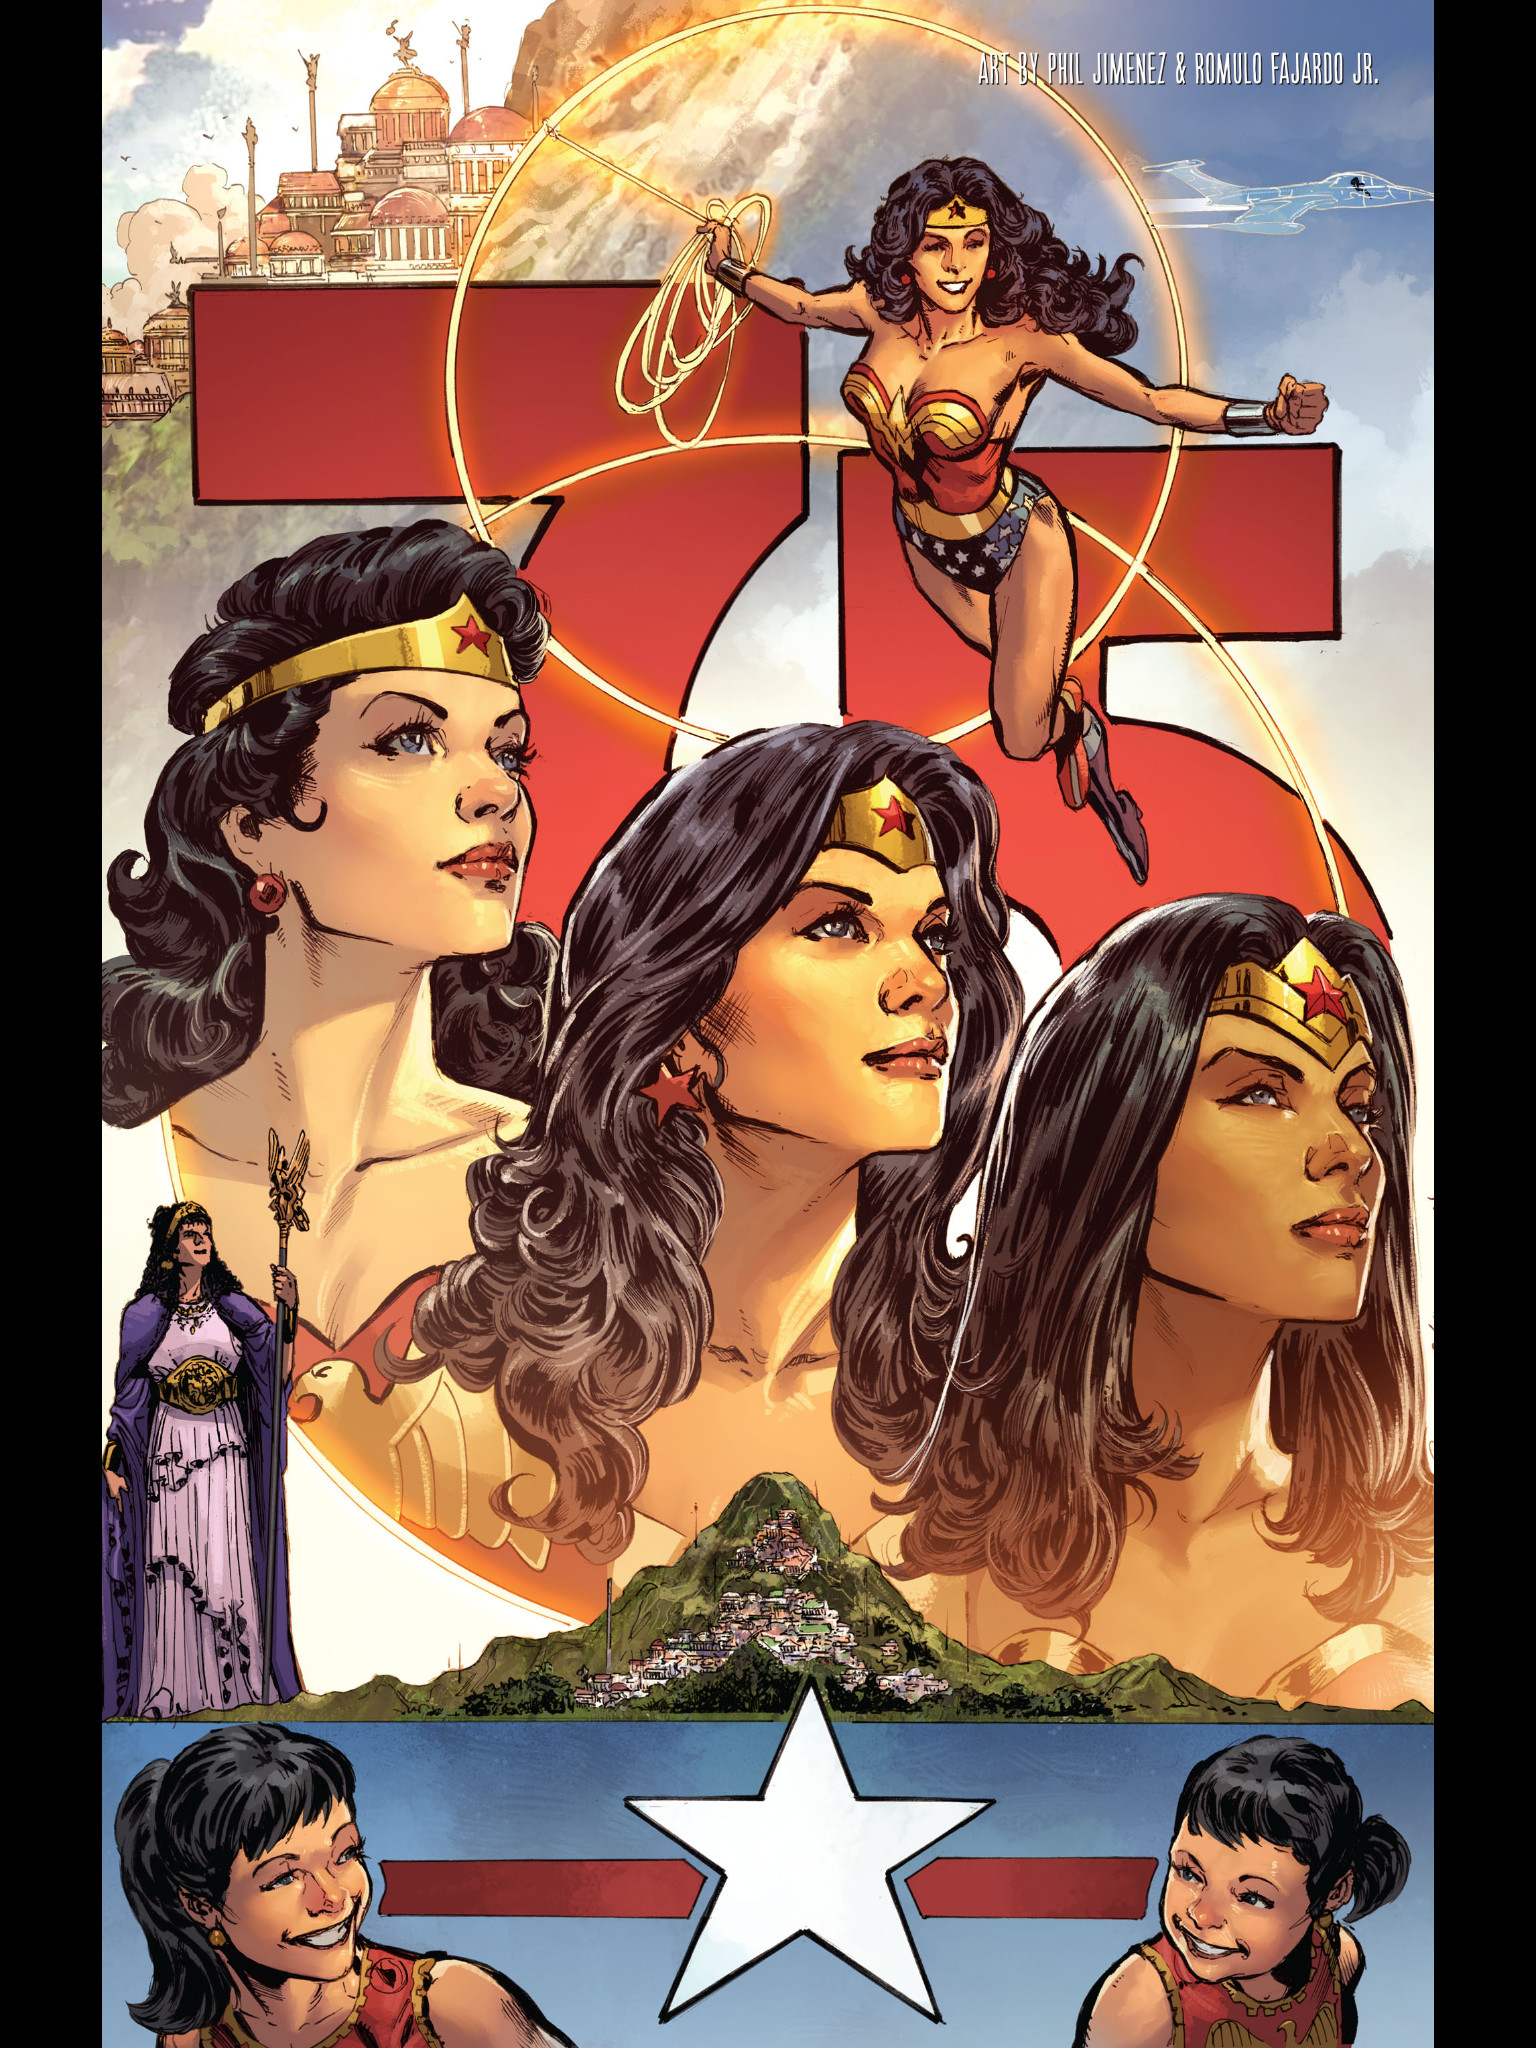 1536x2048 Wonder Woman 75th anniversary tribute by Phil Jimenez